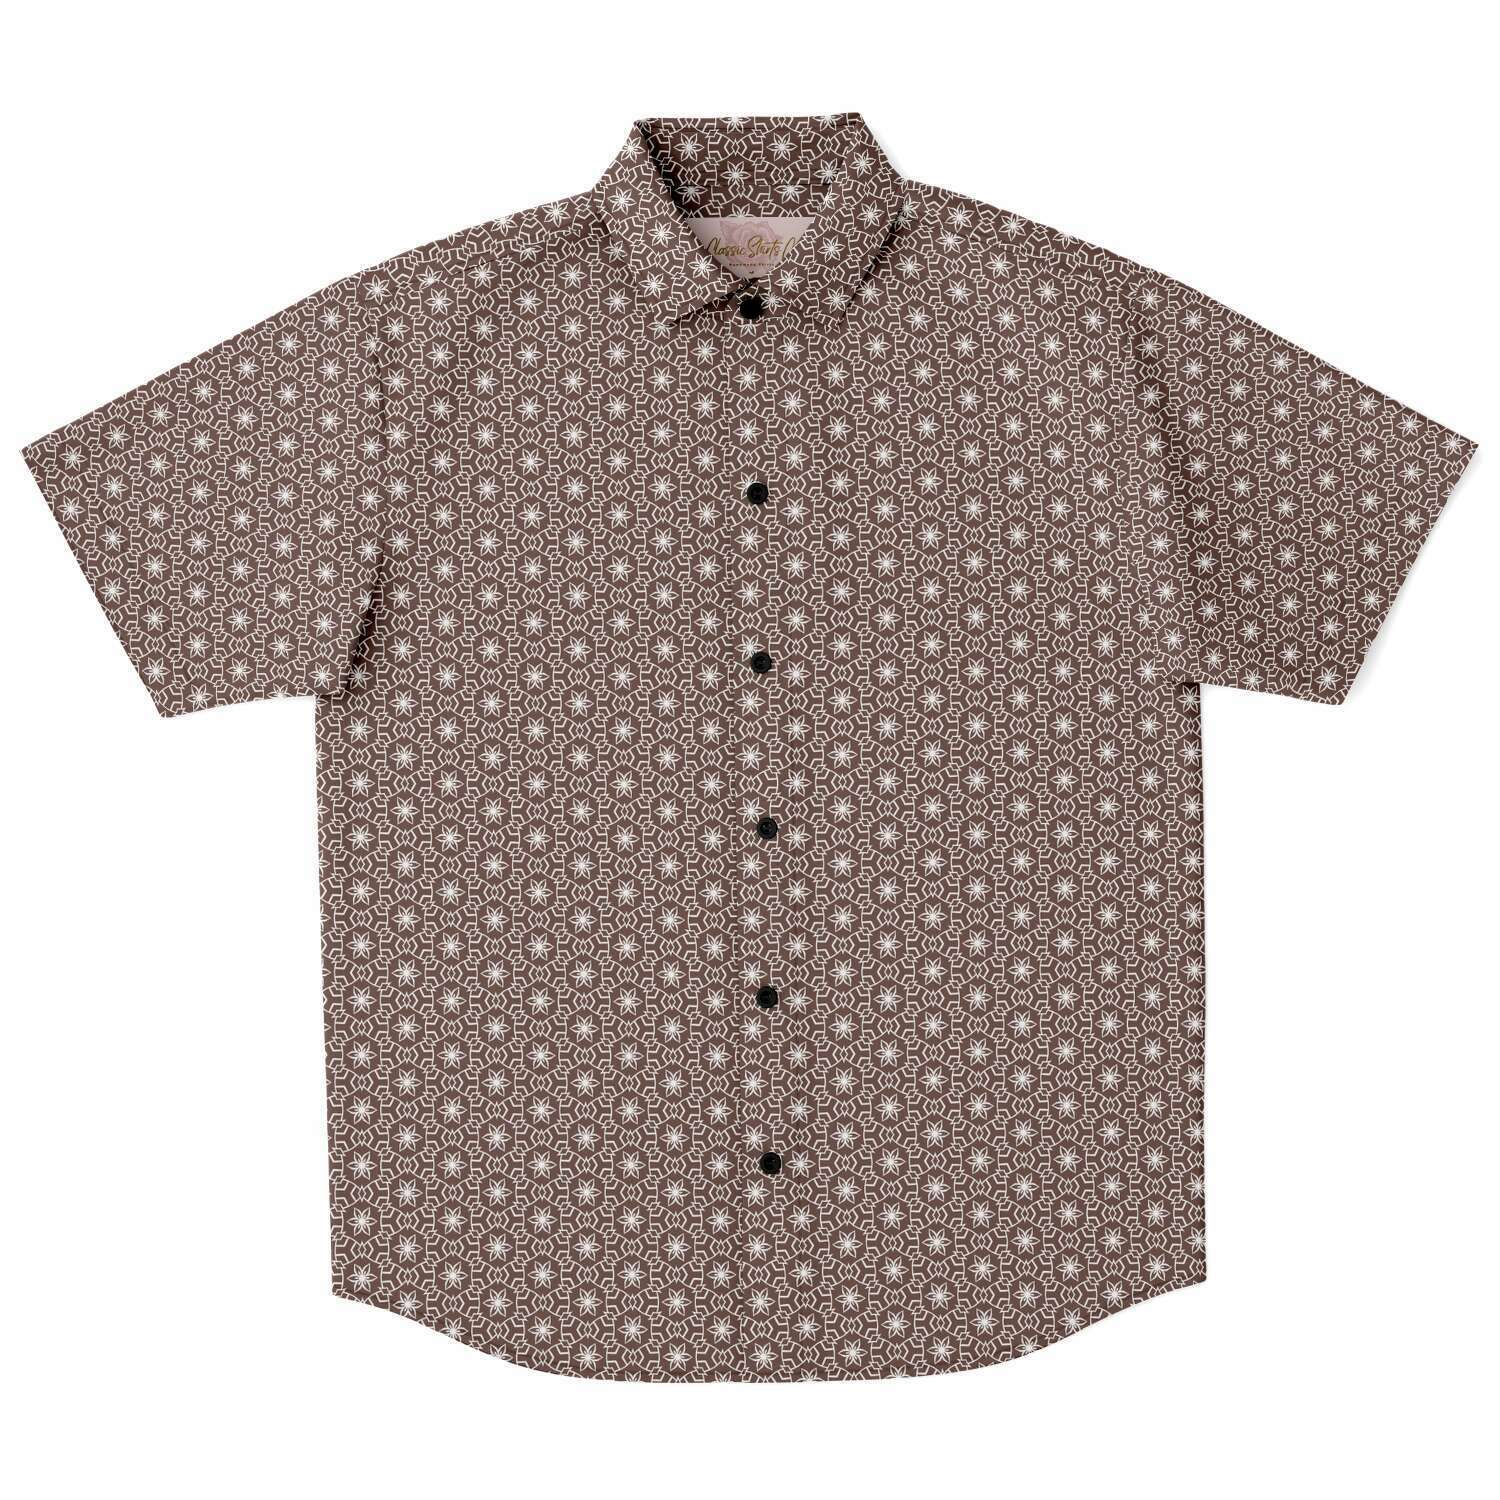 Espresso Brown Geometric Flower Print Men's Short Sleeve Button Down Shirt - kayzers